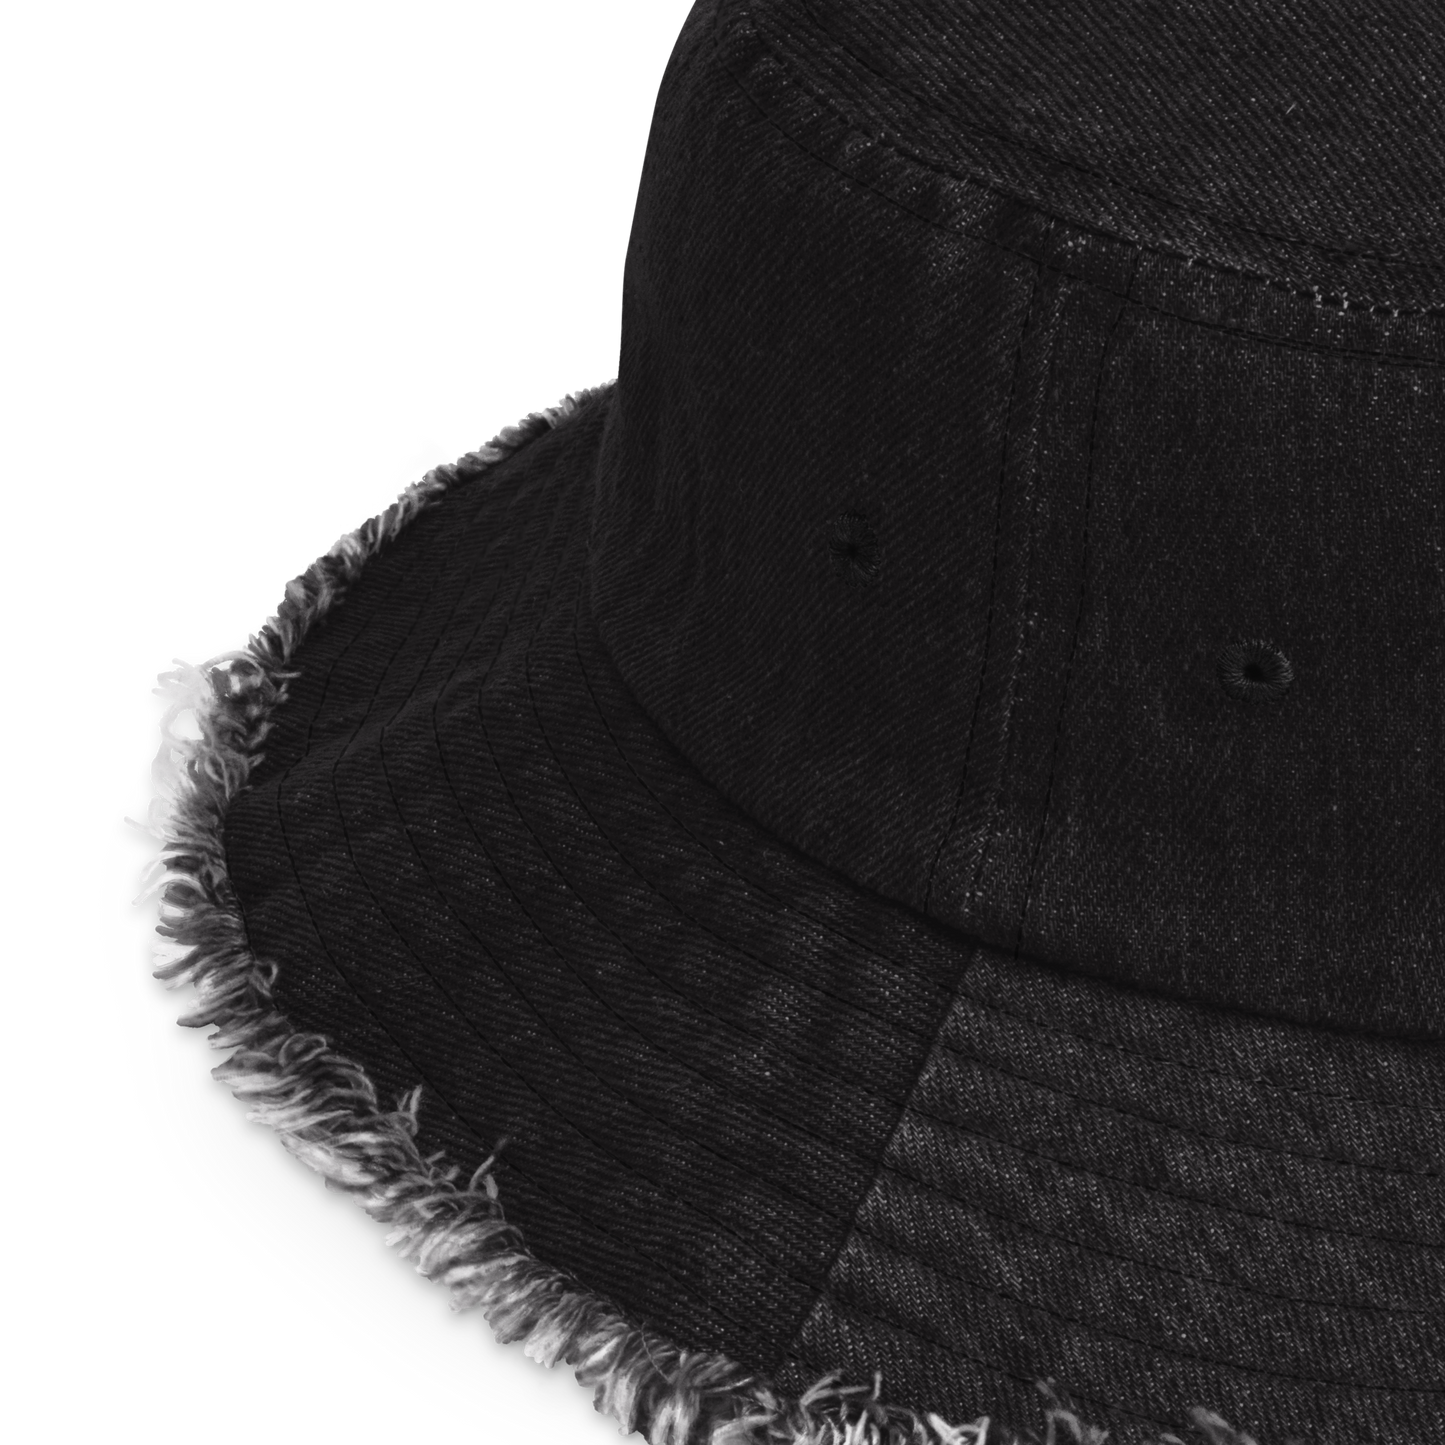 Black is Beautiful Distressed Denim Bucket Hat